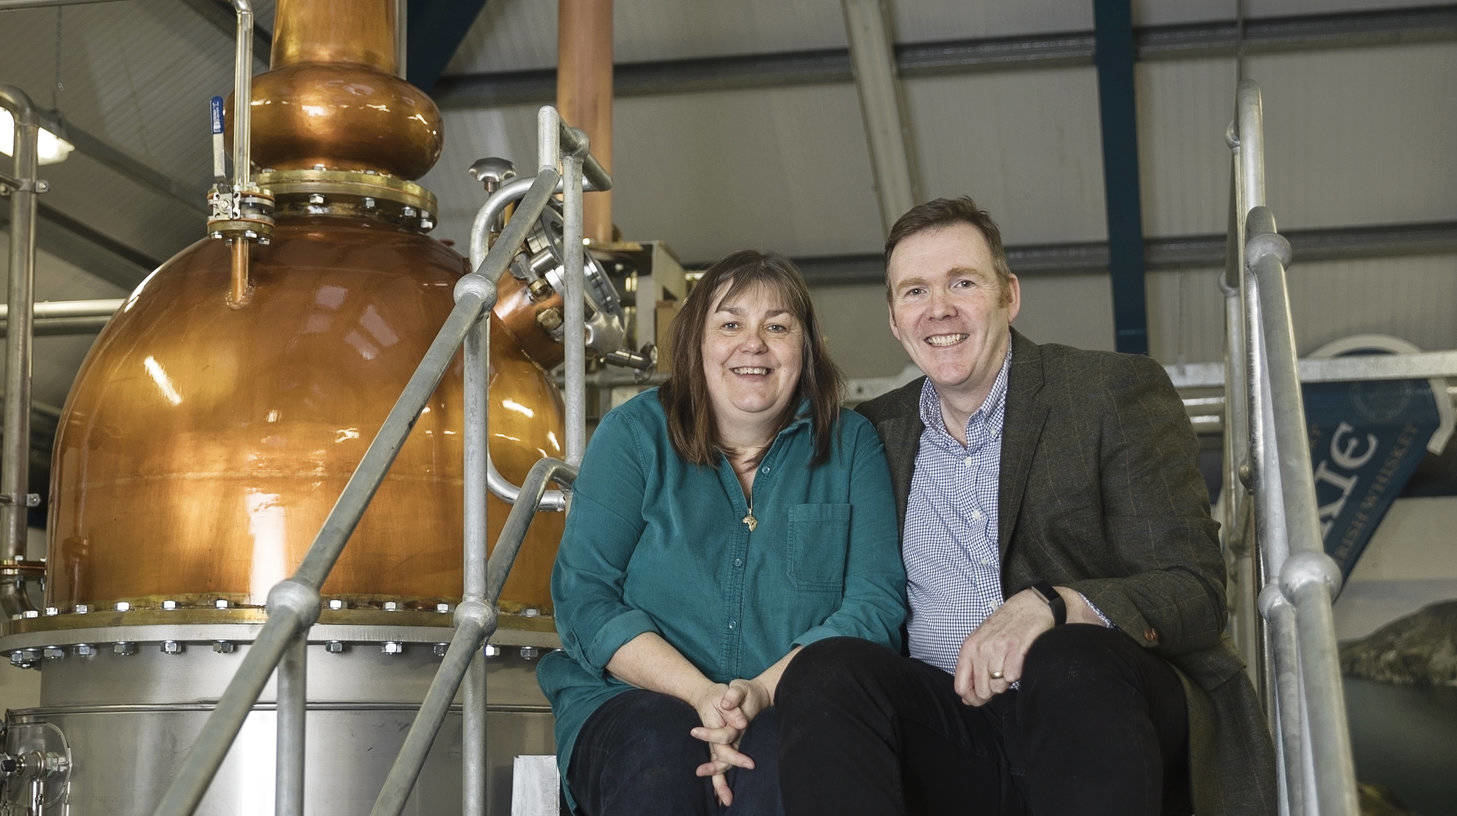 Sliabh Liag Distillery's award-winning directors Moira and James Doherty.